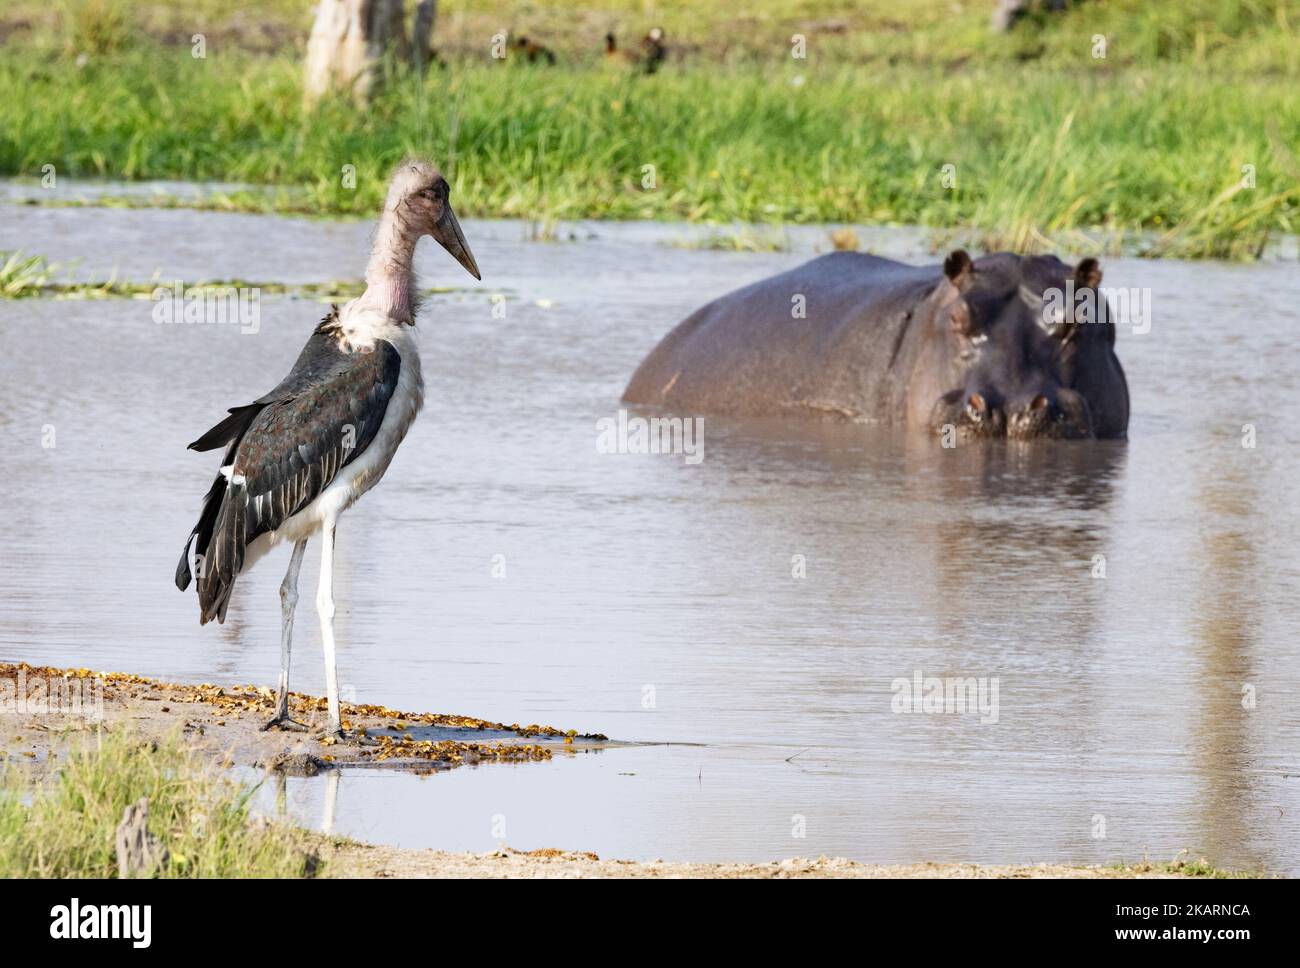 Okavango Delta scene; a Marabou Stork and a Hippopotamus having a face off across the water at a waterhole, Botswana Africa. African wild animals. Stock Photo